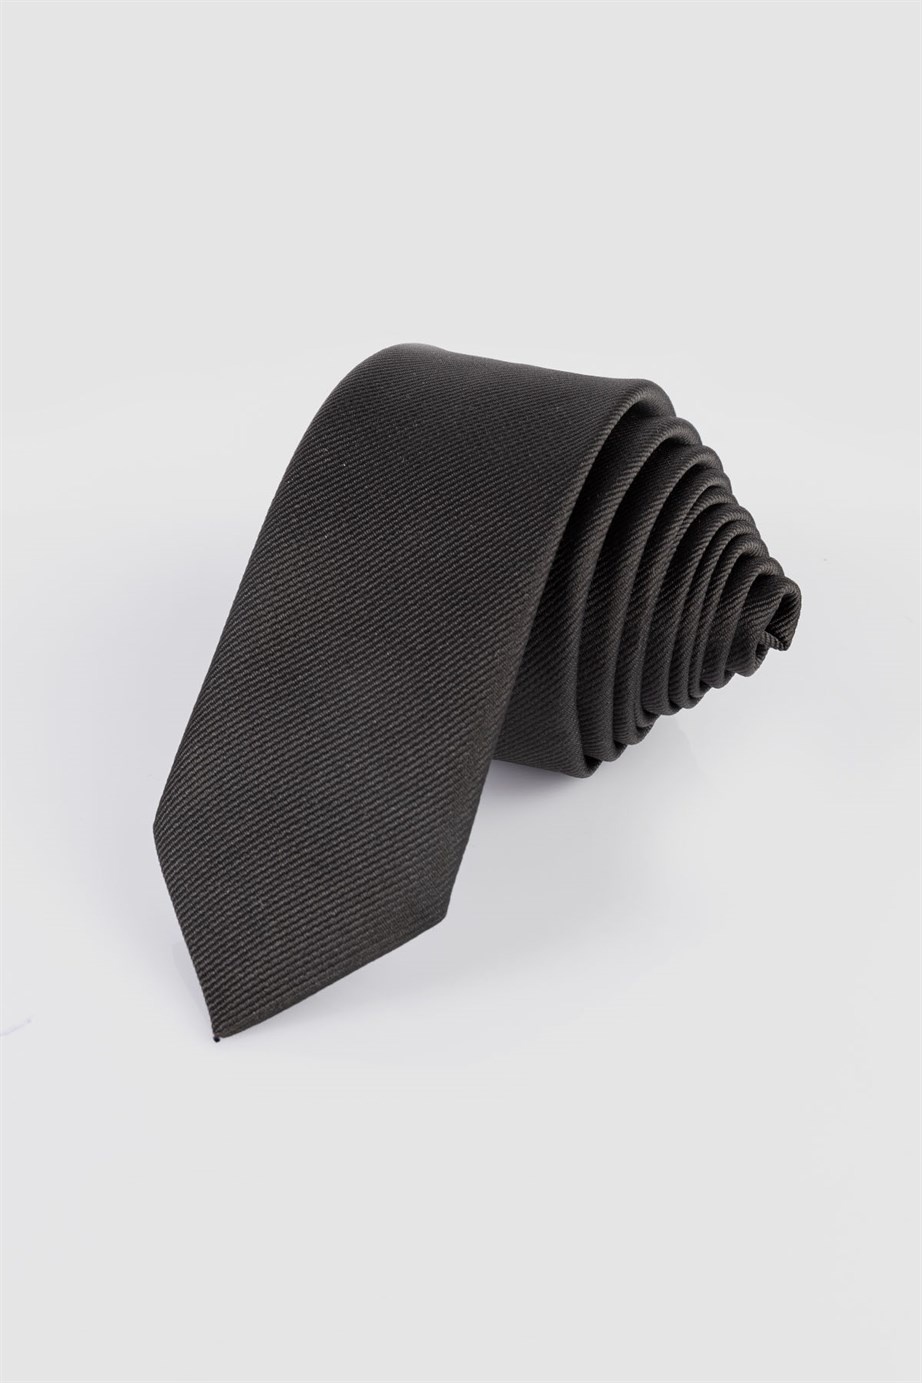 Striped Black Tie